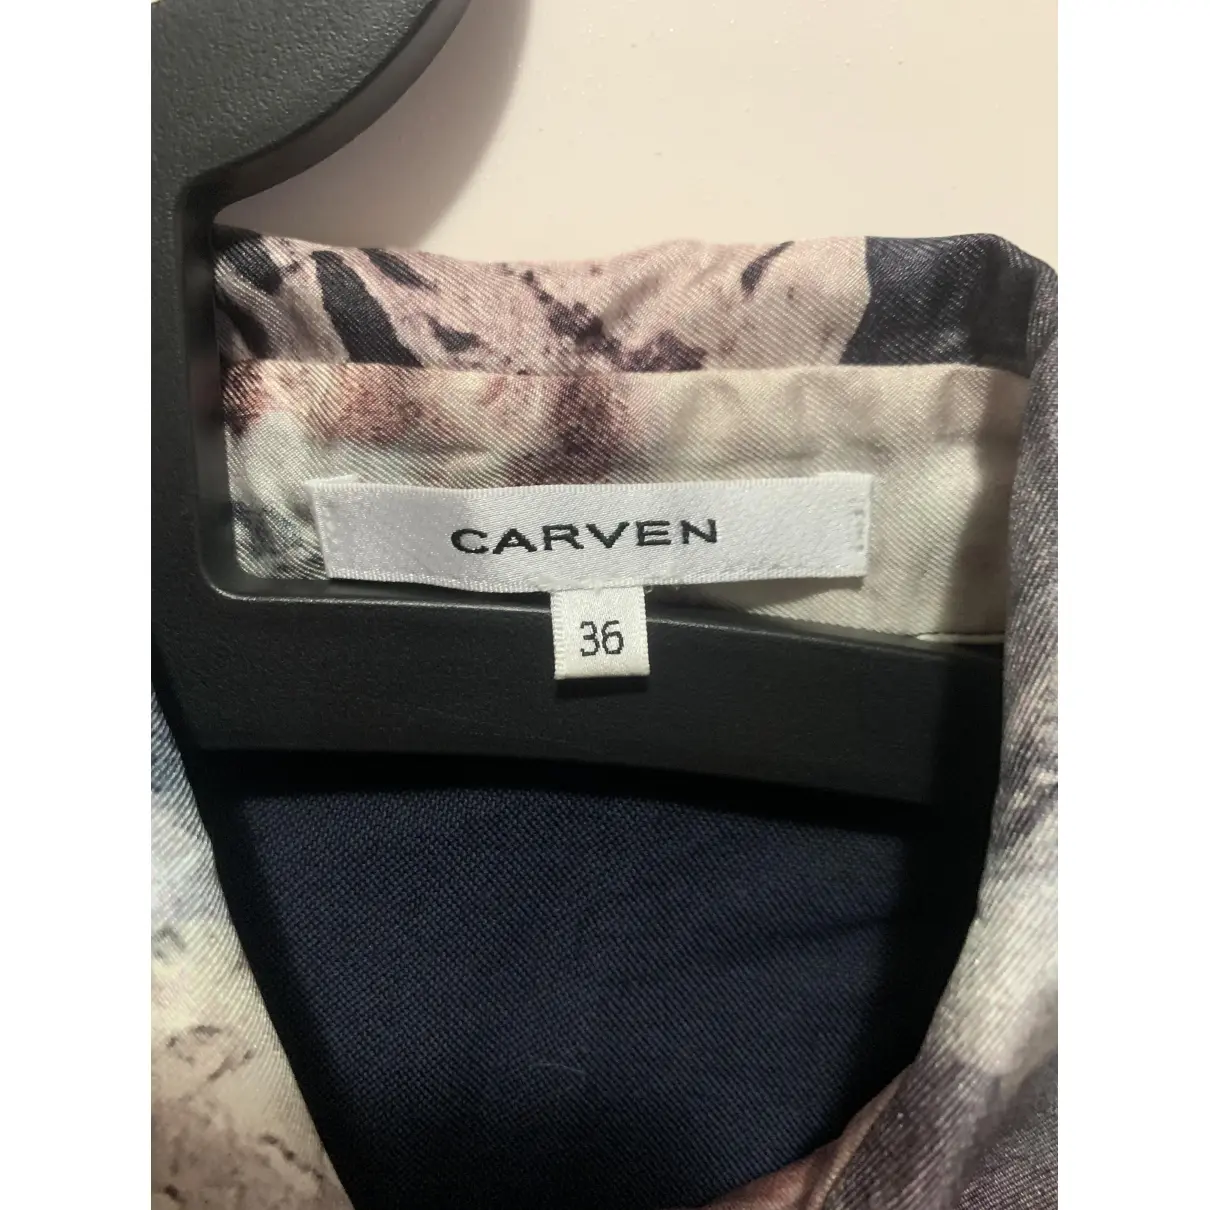 Buy Carven Shirt online